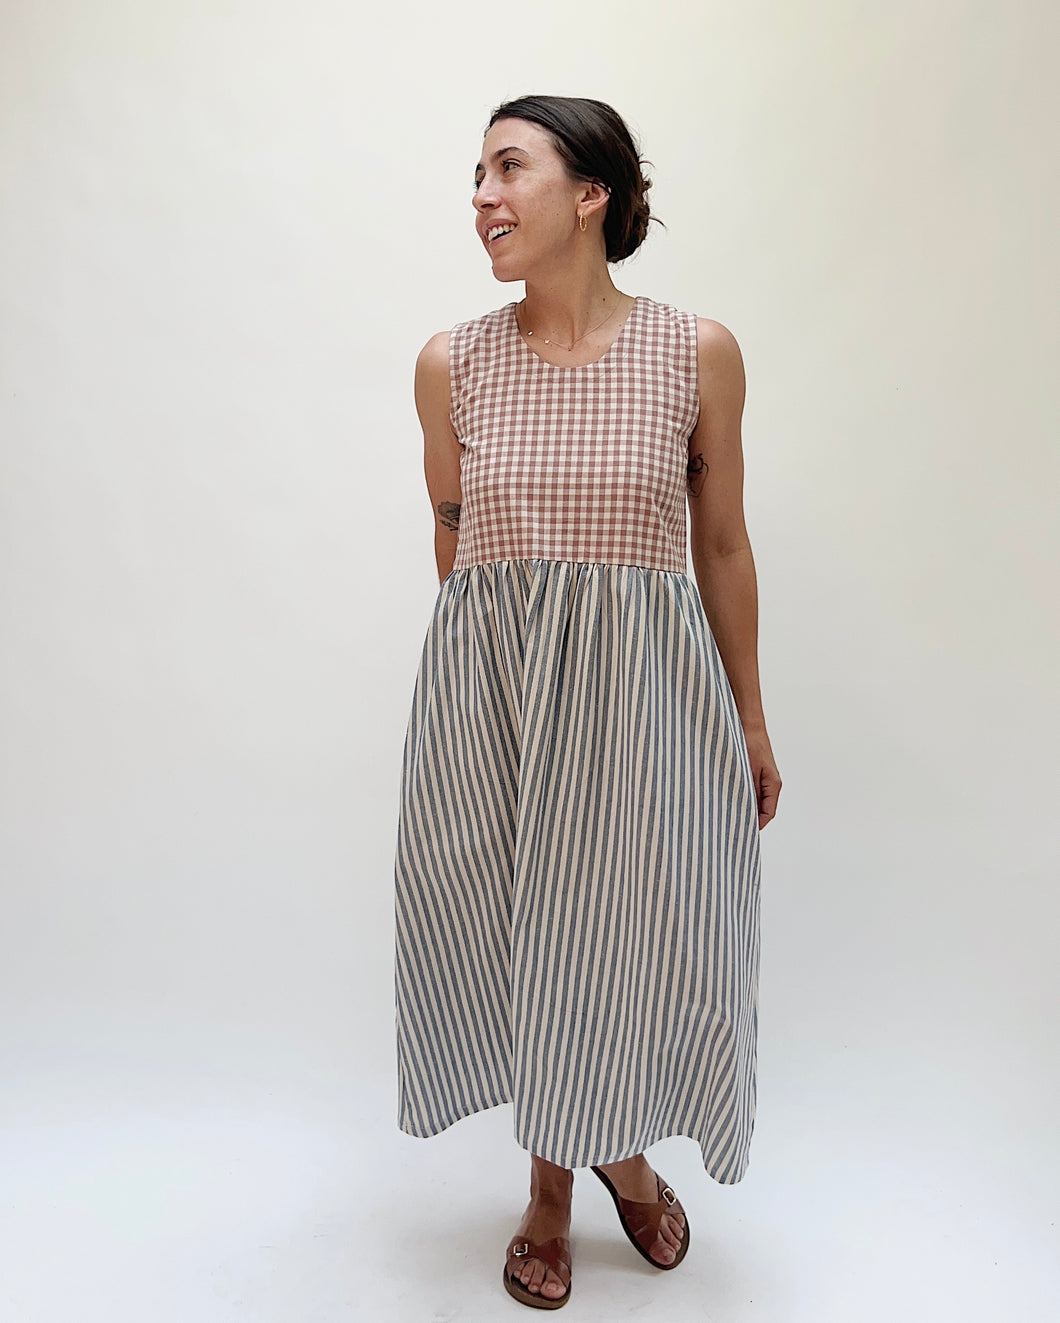 Mata Traders | Lilah Dress in Gingham Stripe Mix